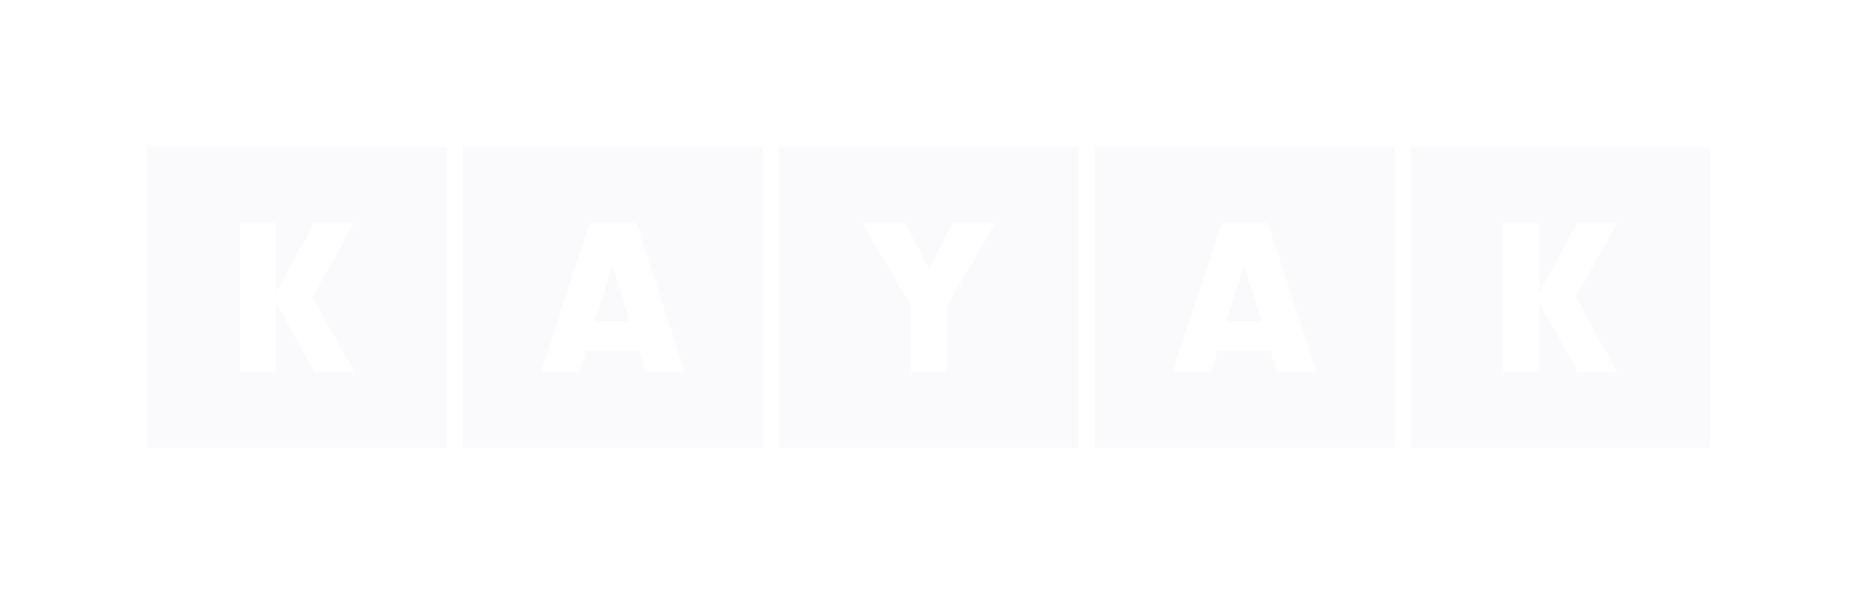 Partenariat Kayak.com